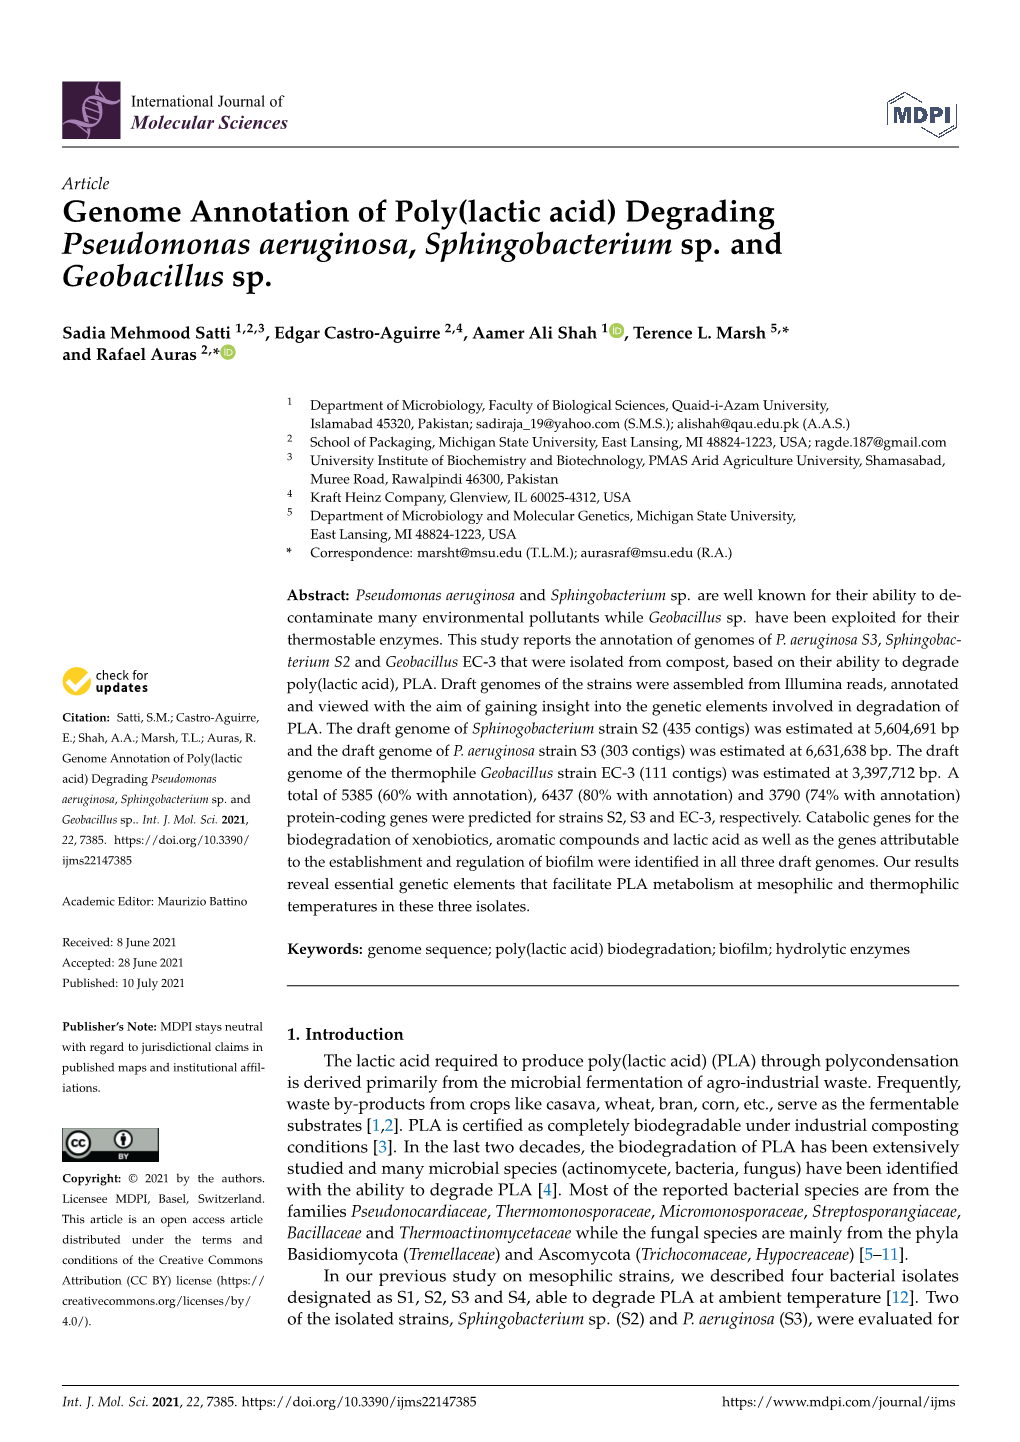 Genome Annotation of Poly(Lactic Acid) Degrading Pseudomonas Aeruginosa, Sphingobacterium Sp. and Geobacillus Sp